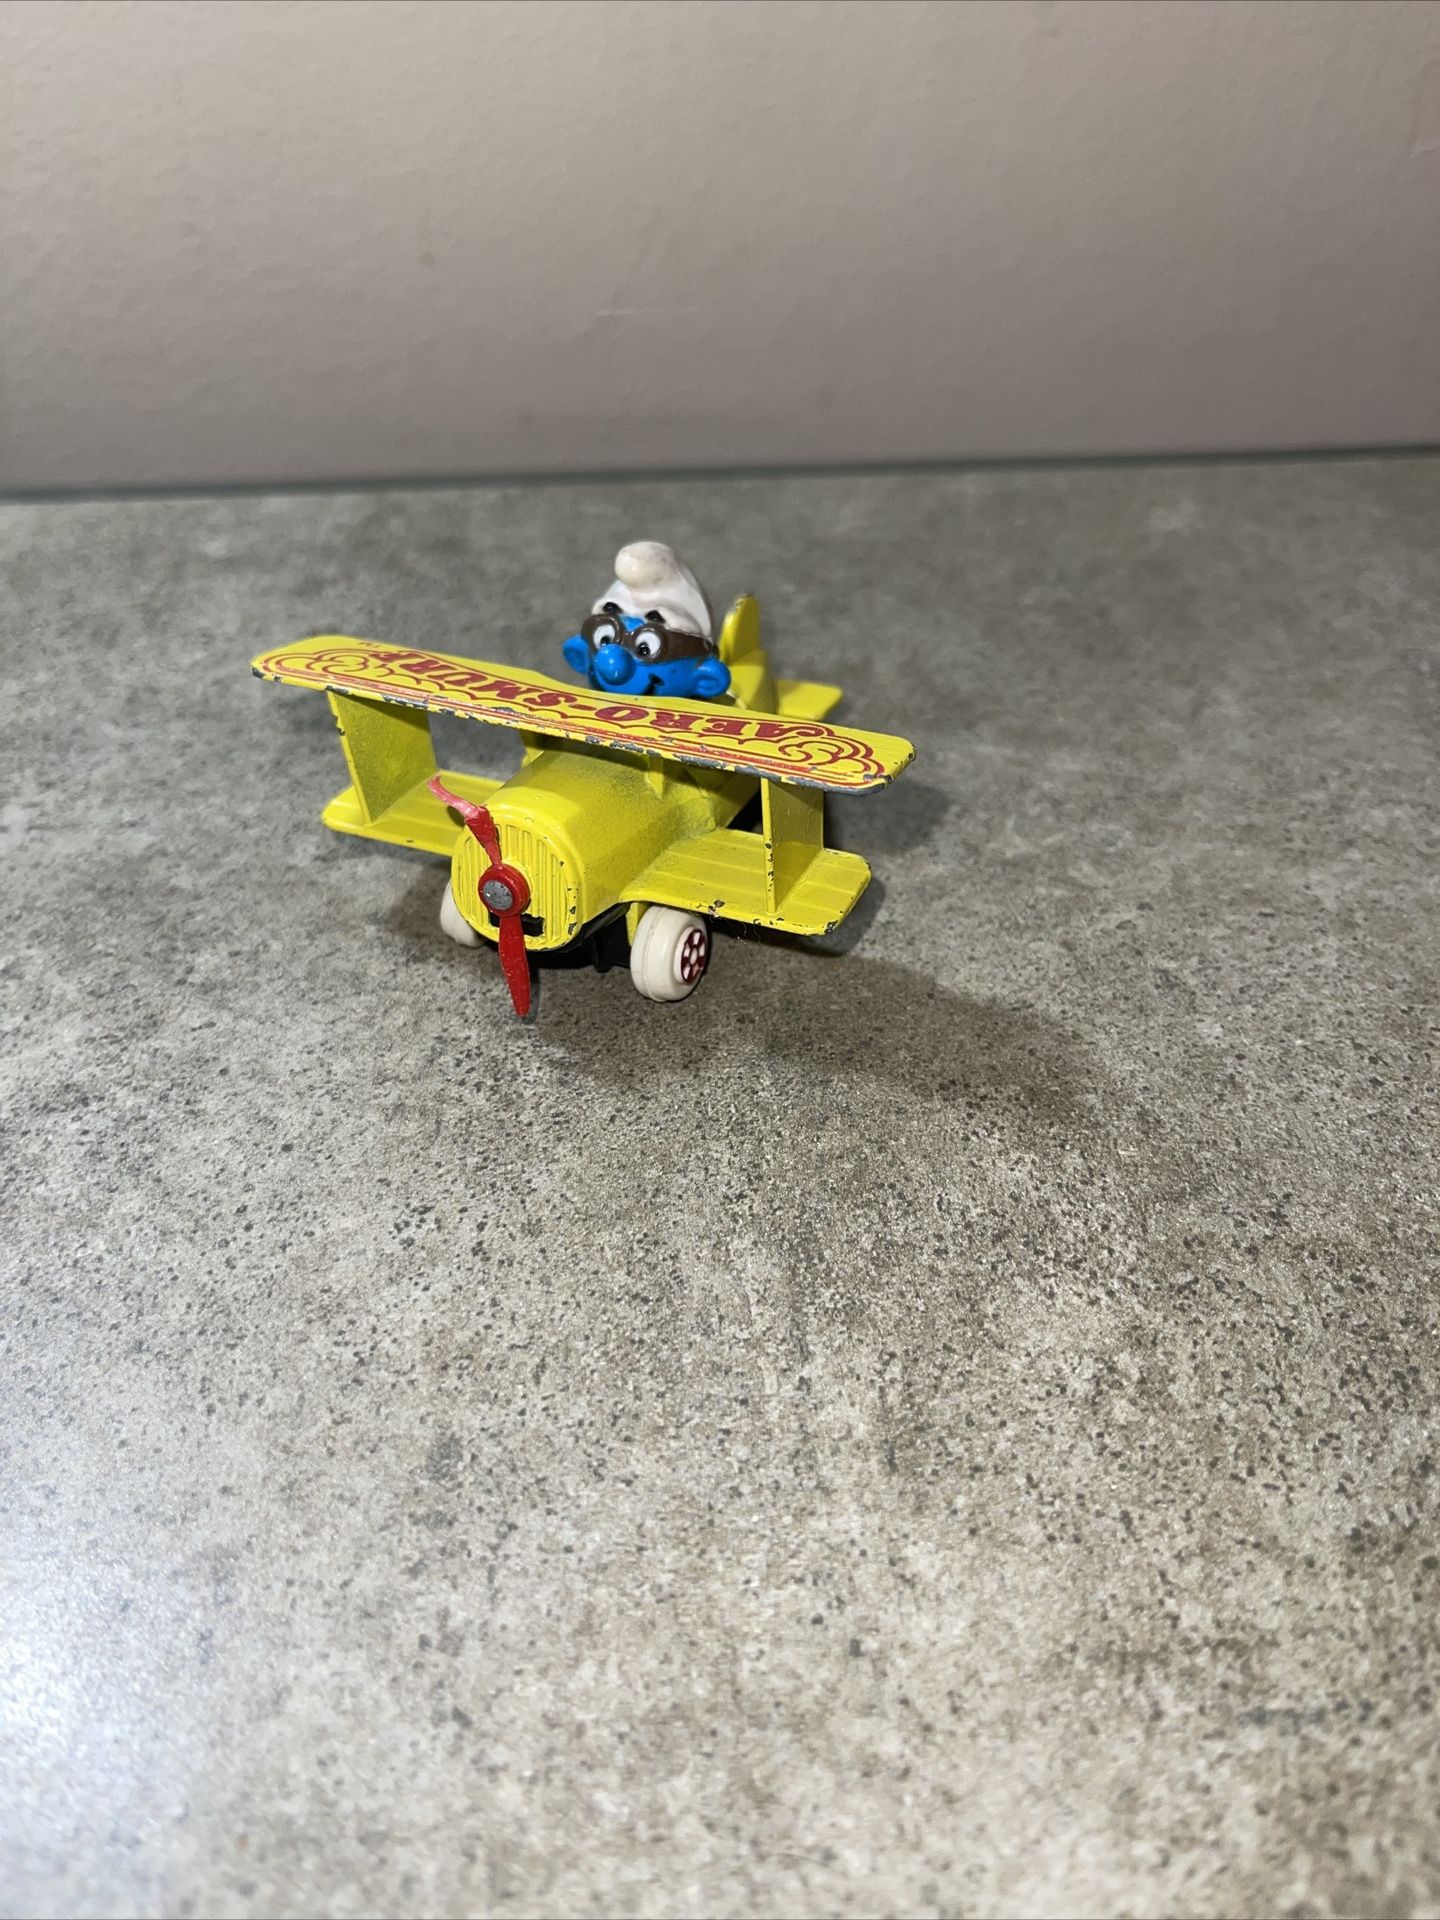 Smurfs Ertl Airplane Aero Smurf Figurine Vintage Die Cast Metal Toy Plane Figure